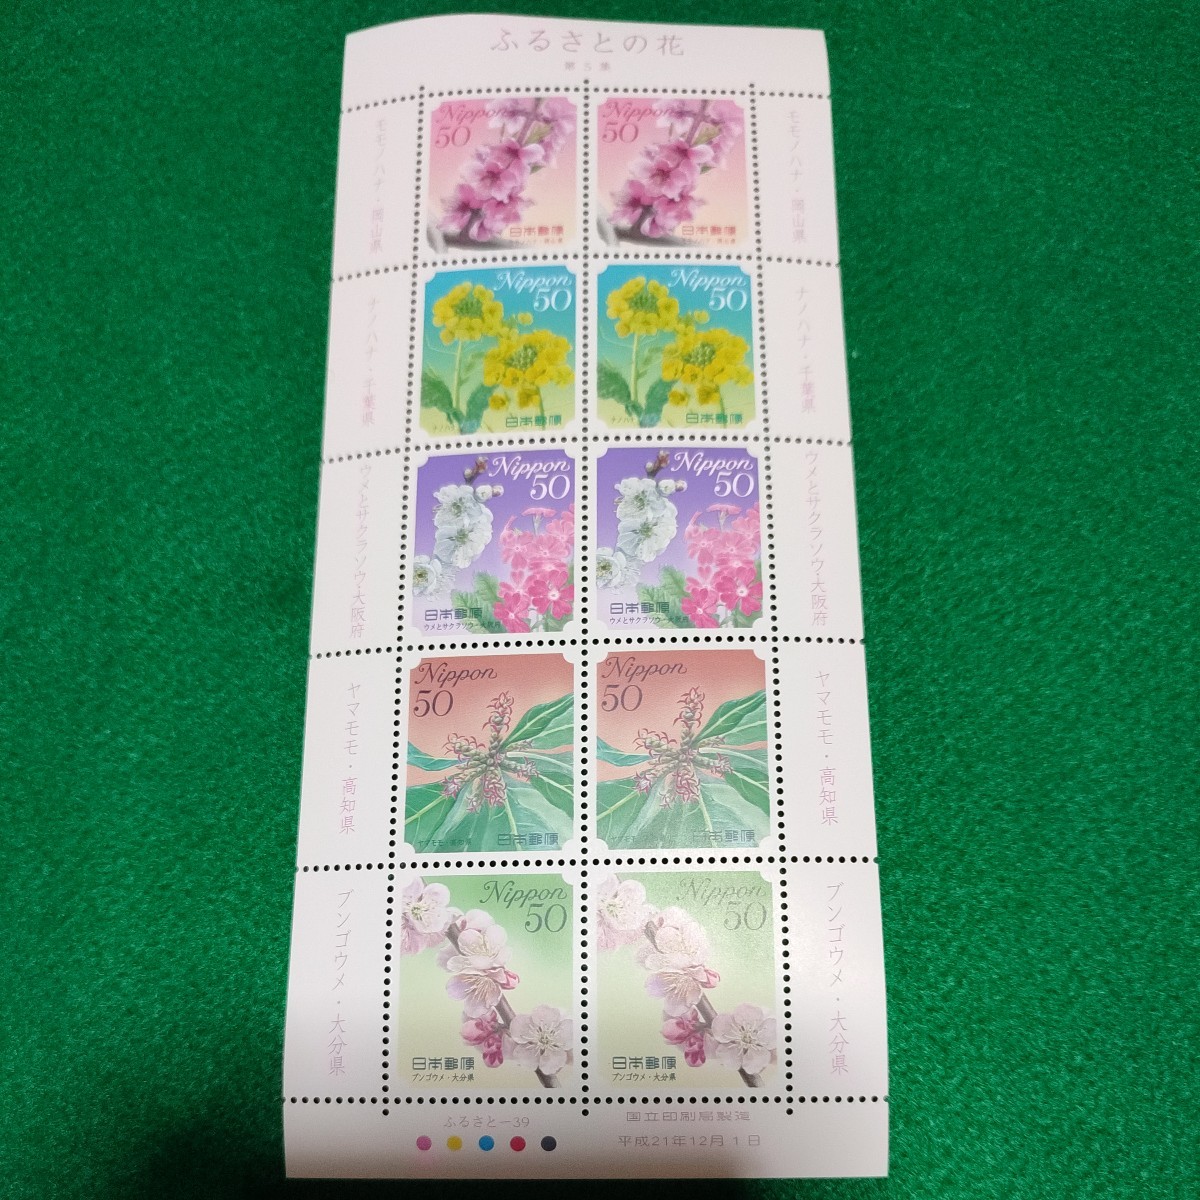 [ postage 84 jpy ~] unused / special stamp /..... flower no. 5 compilation /50 jpy stamp seat / face value 500 jpy / Furusato Stamp / Heisei era 21 year spring summer autumn winter Sakura saw bn go me